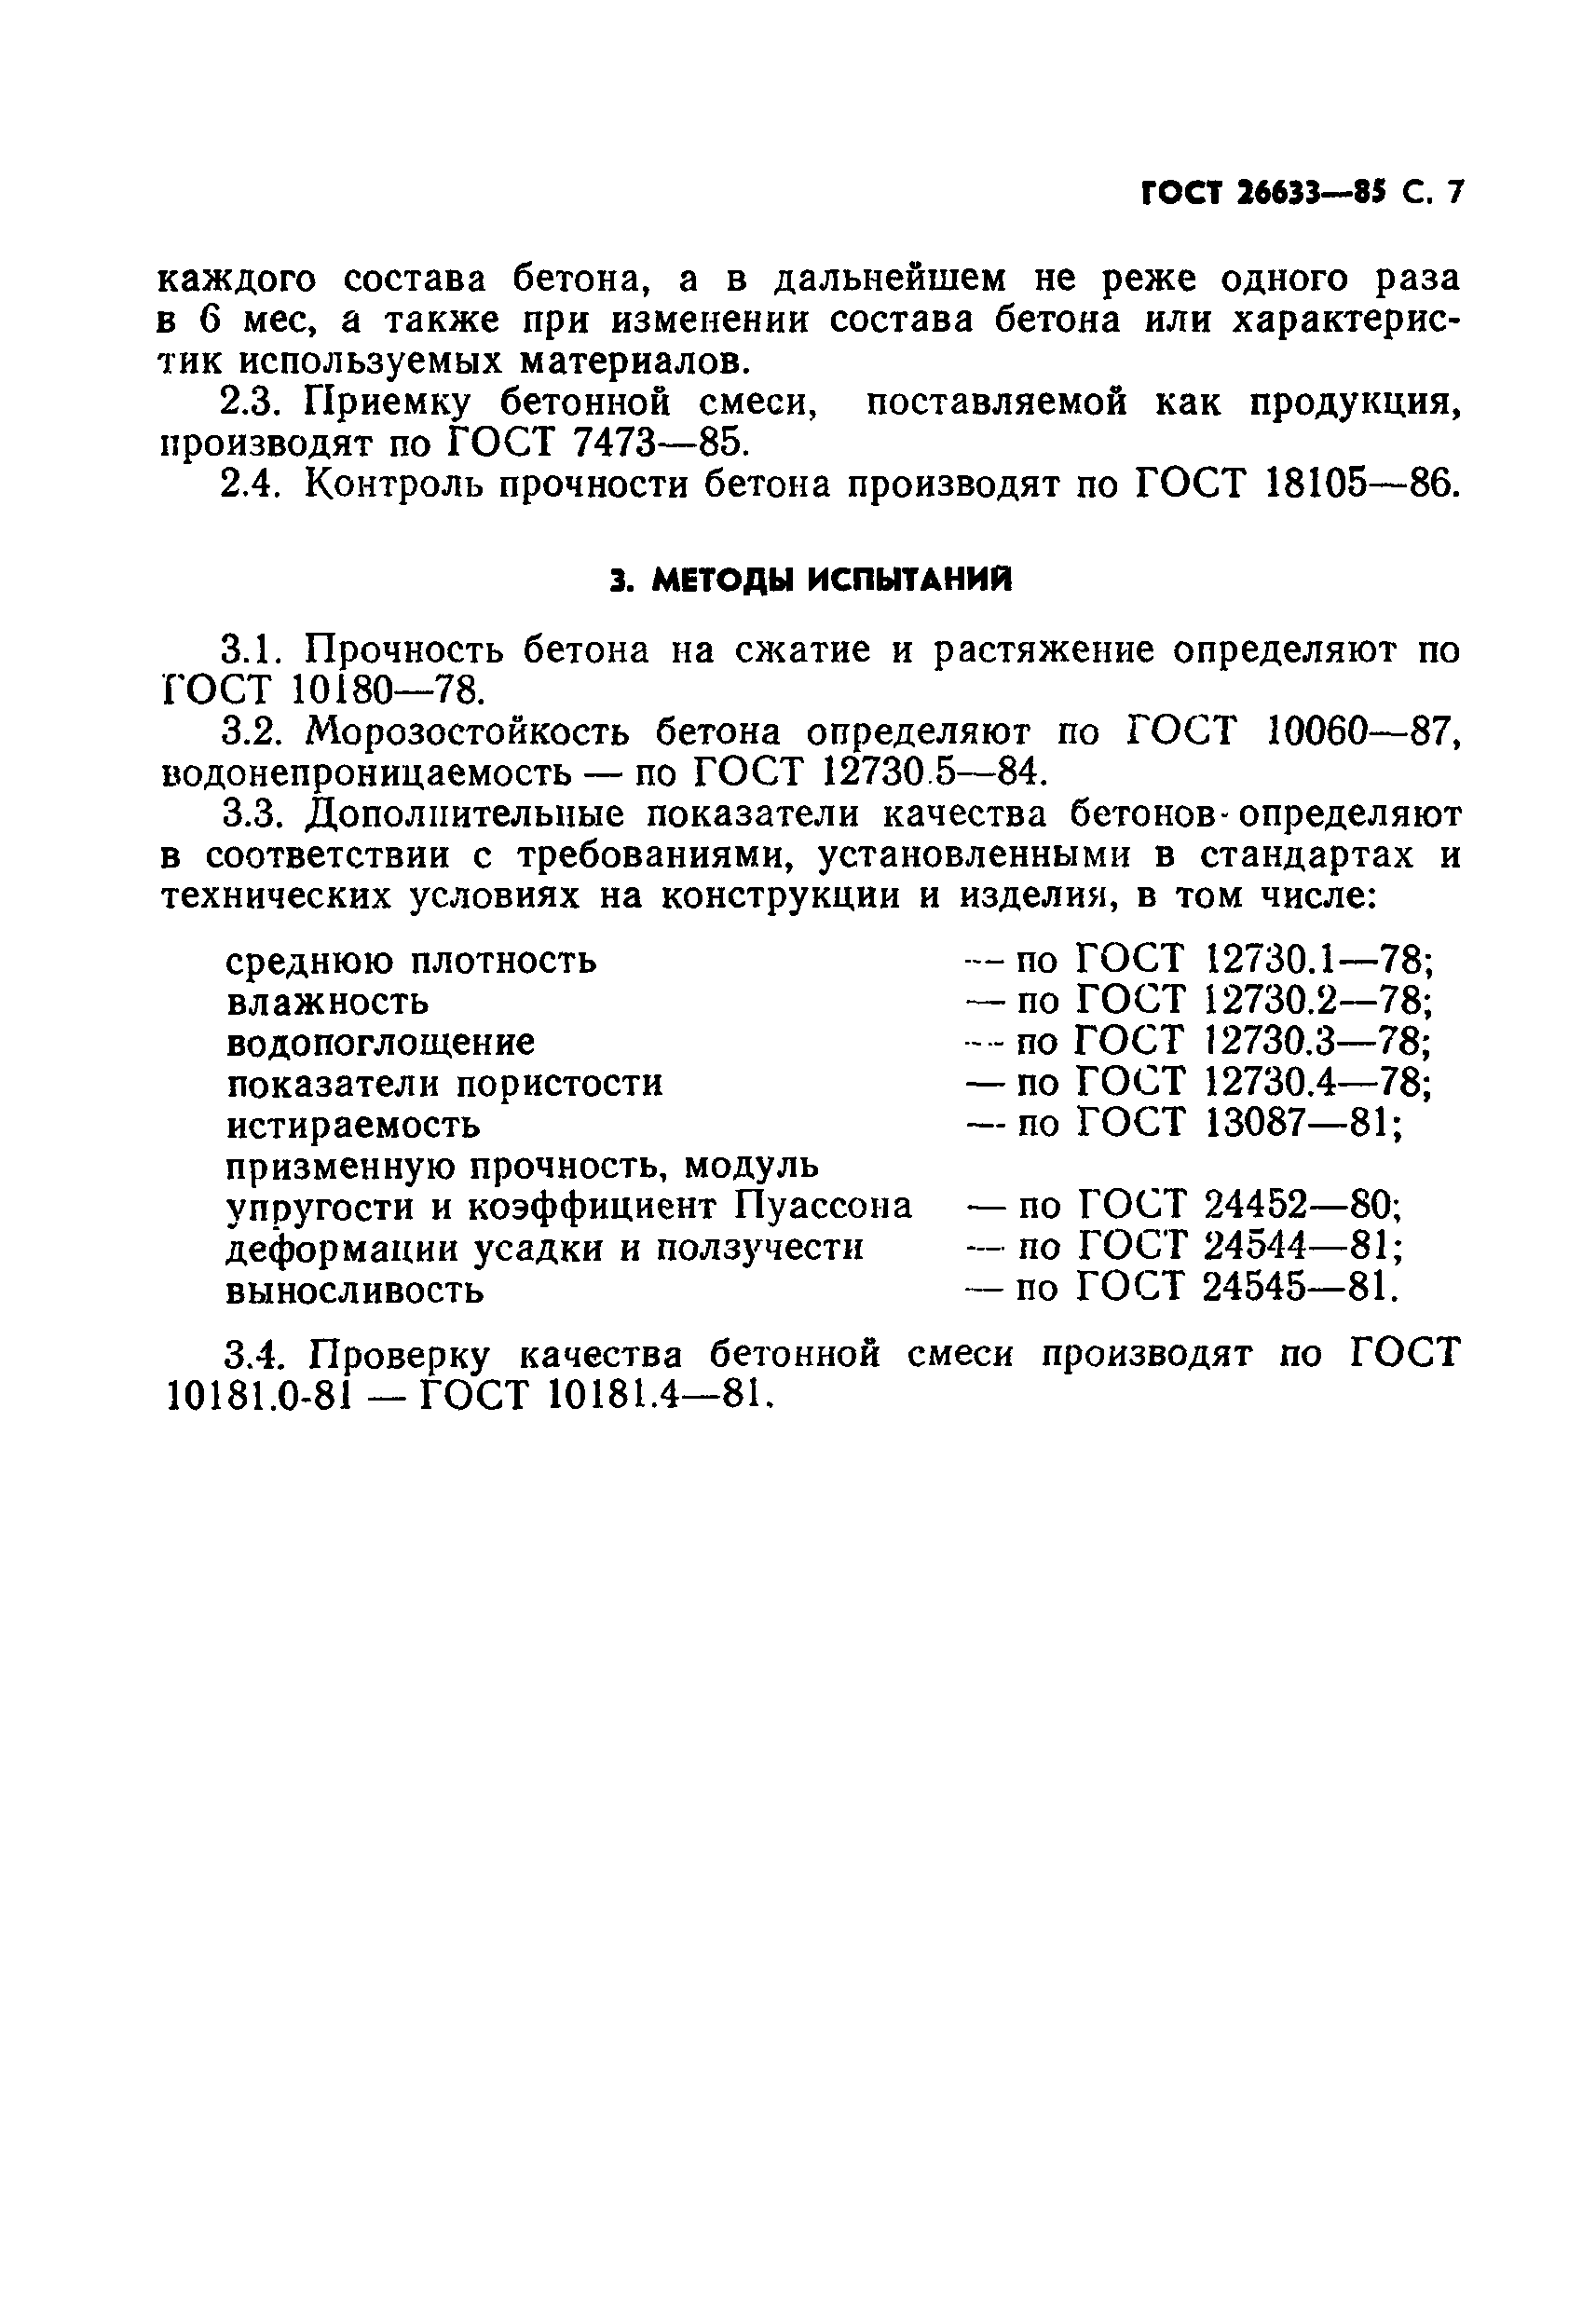 ГОСТ 26633-85